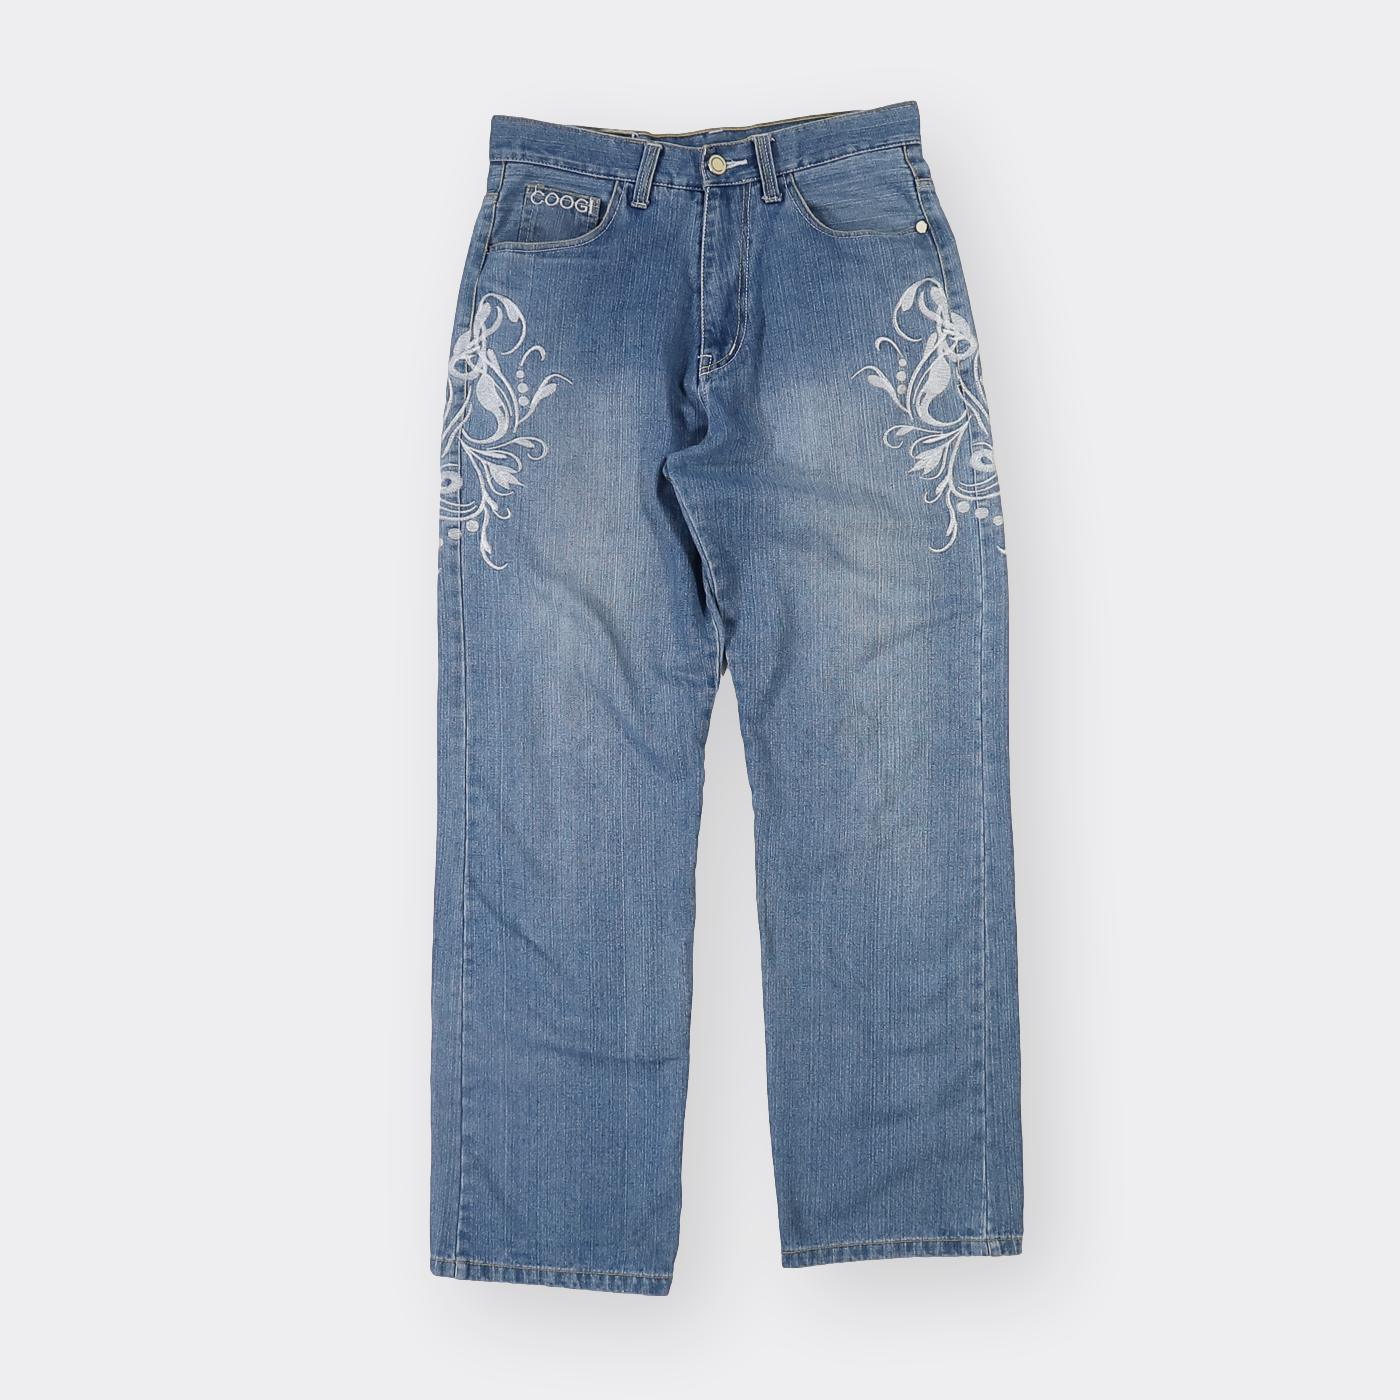 Coogi Vintage Denim Jeans - 32" x 31" - Known Source